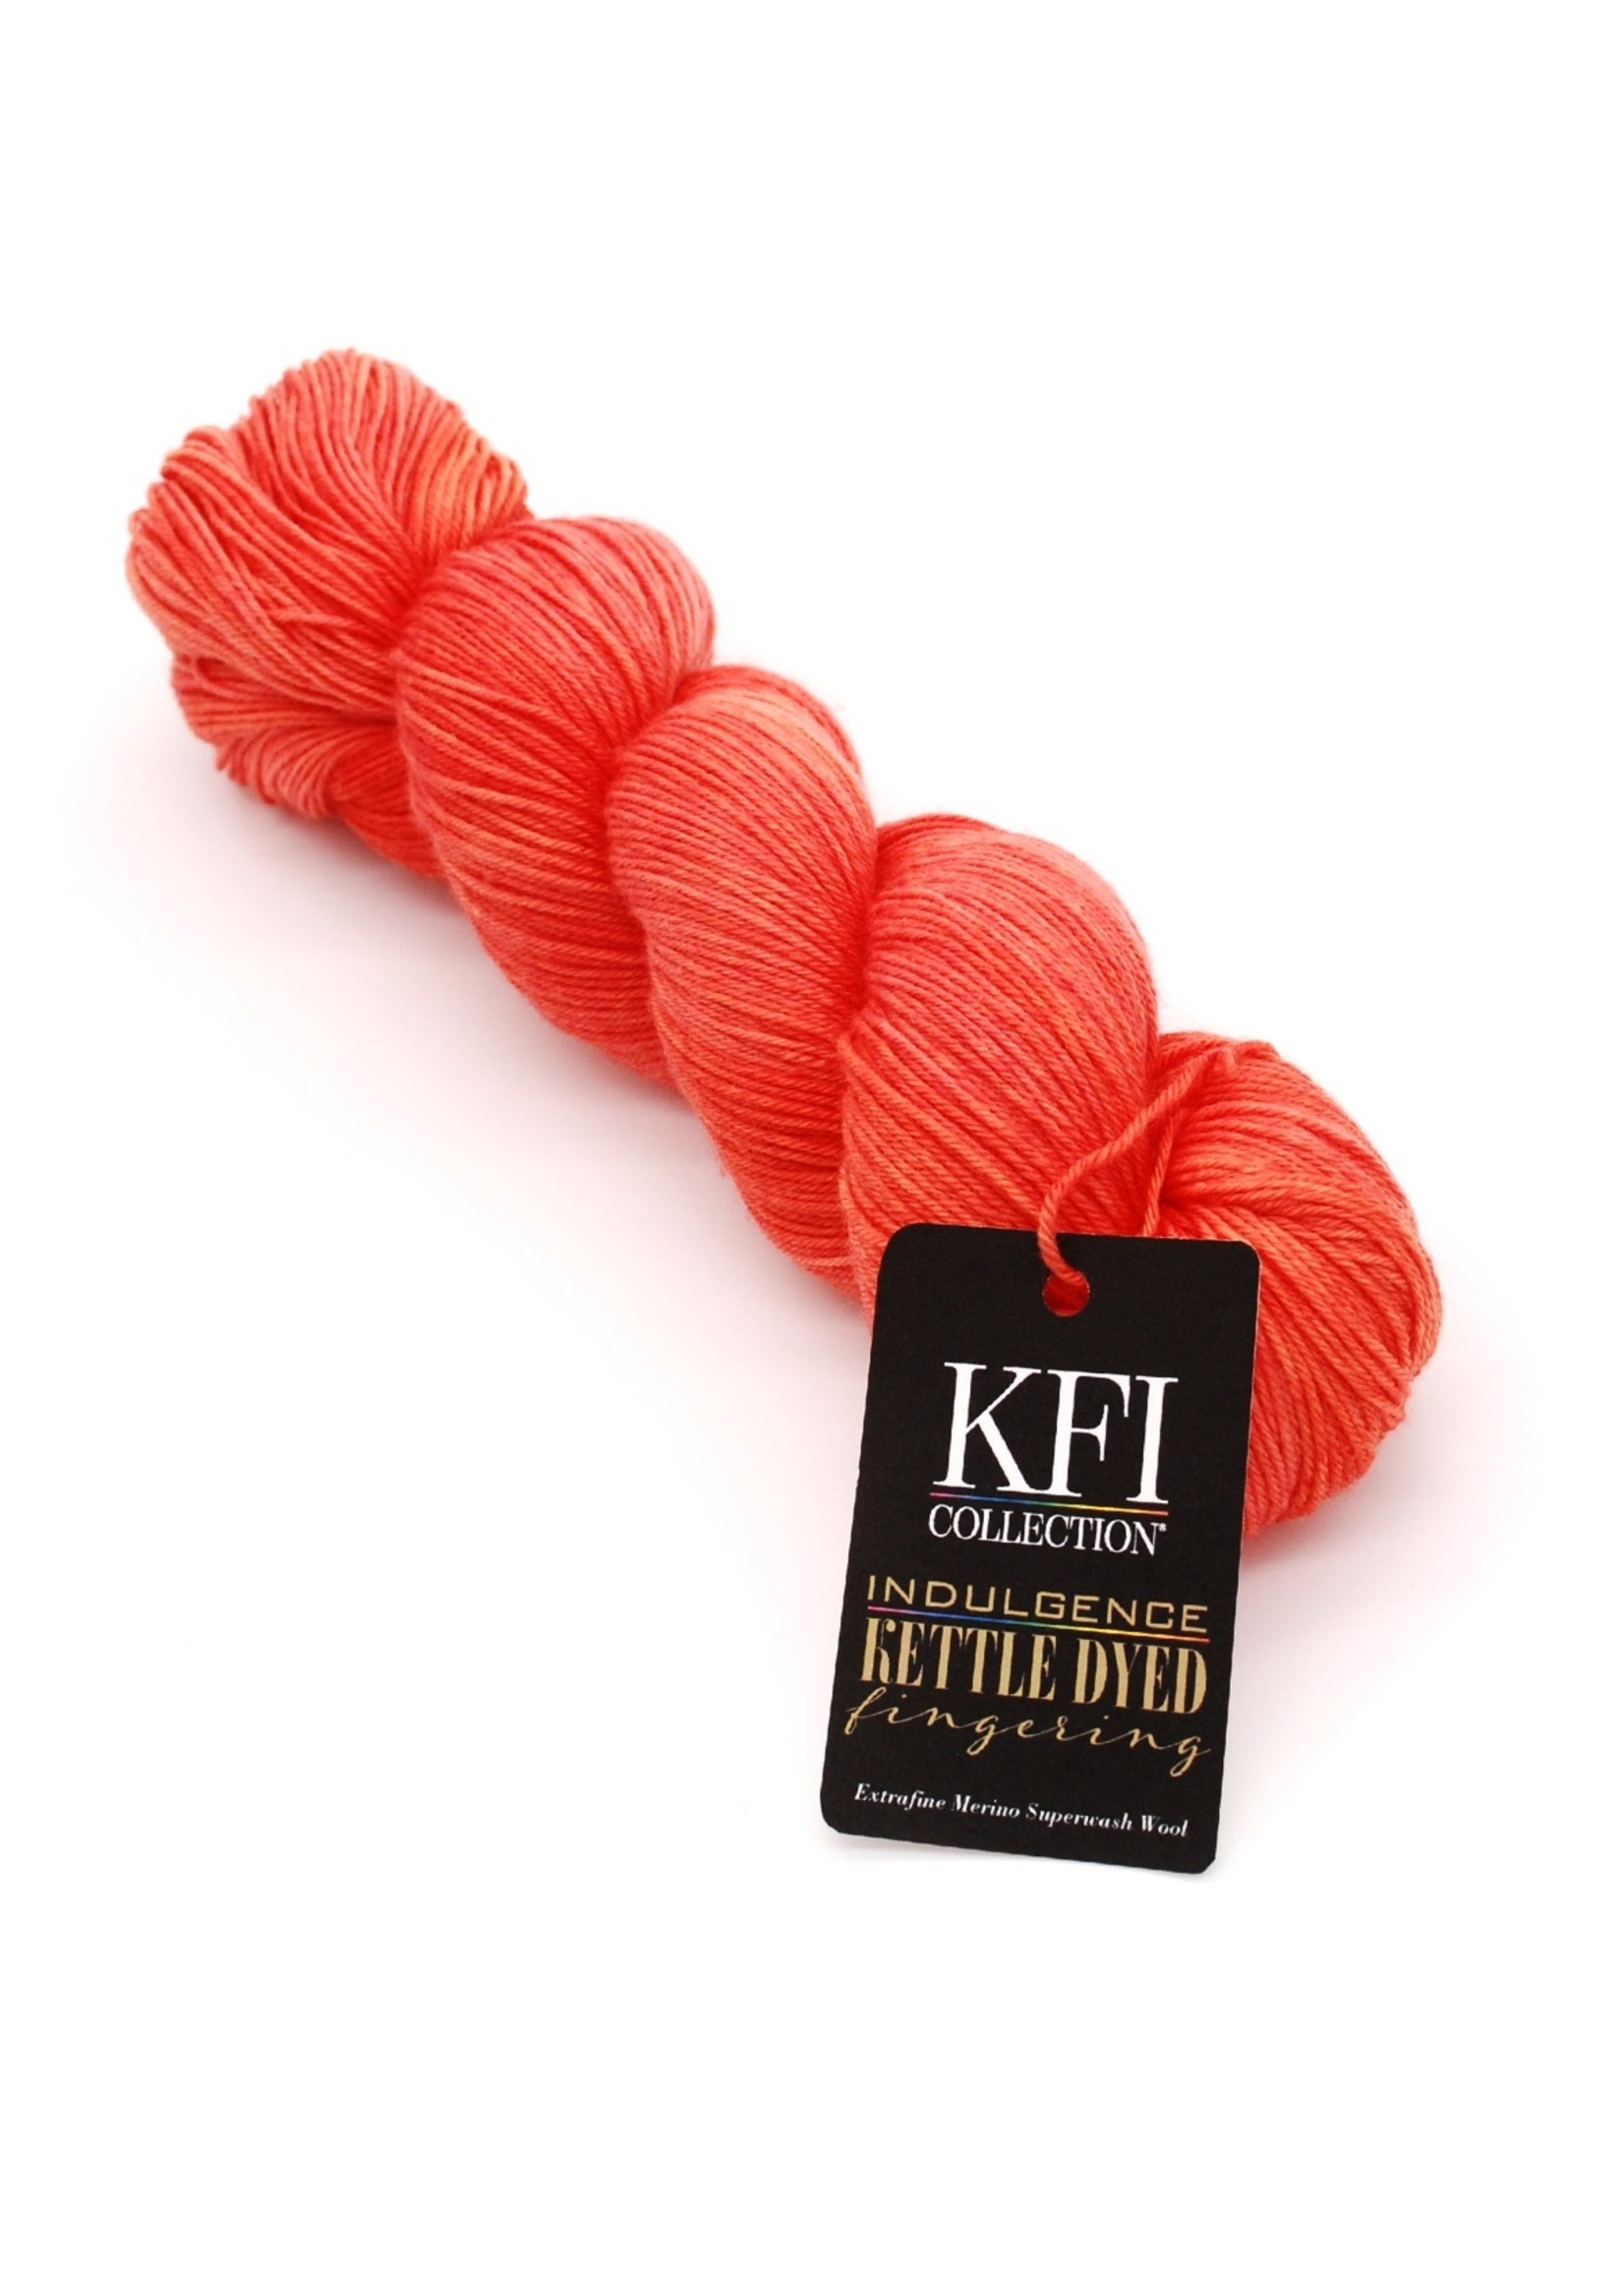 KFI Collection Indulgence Kettle Dyed